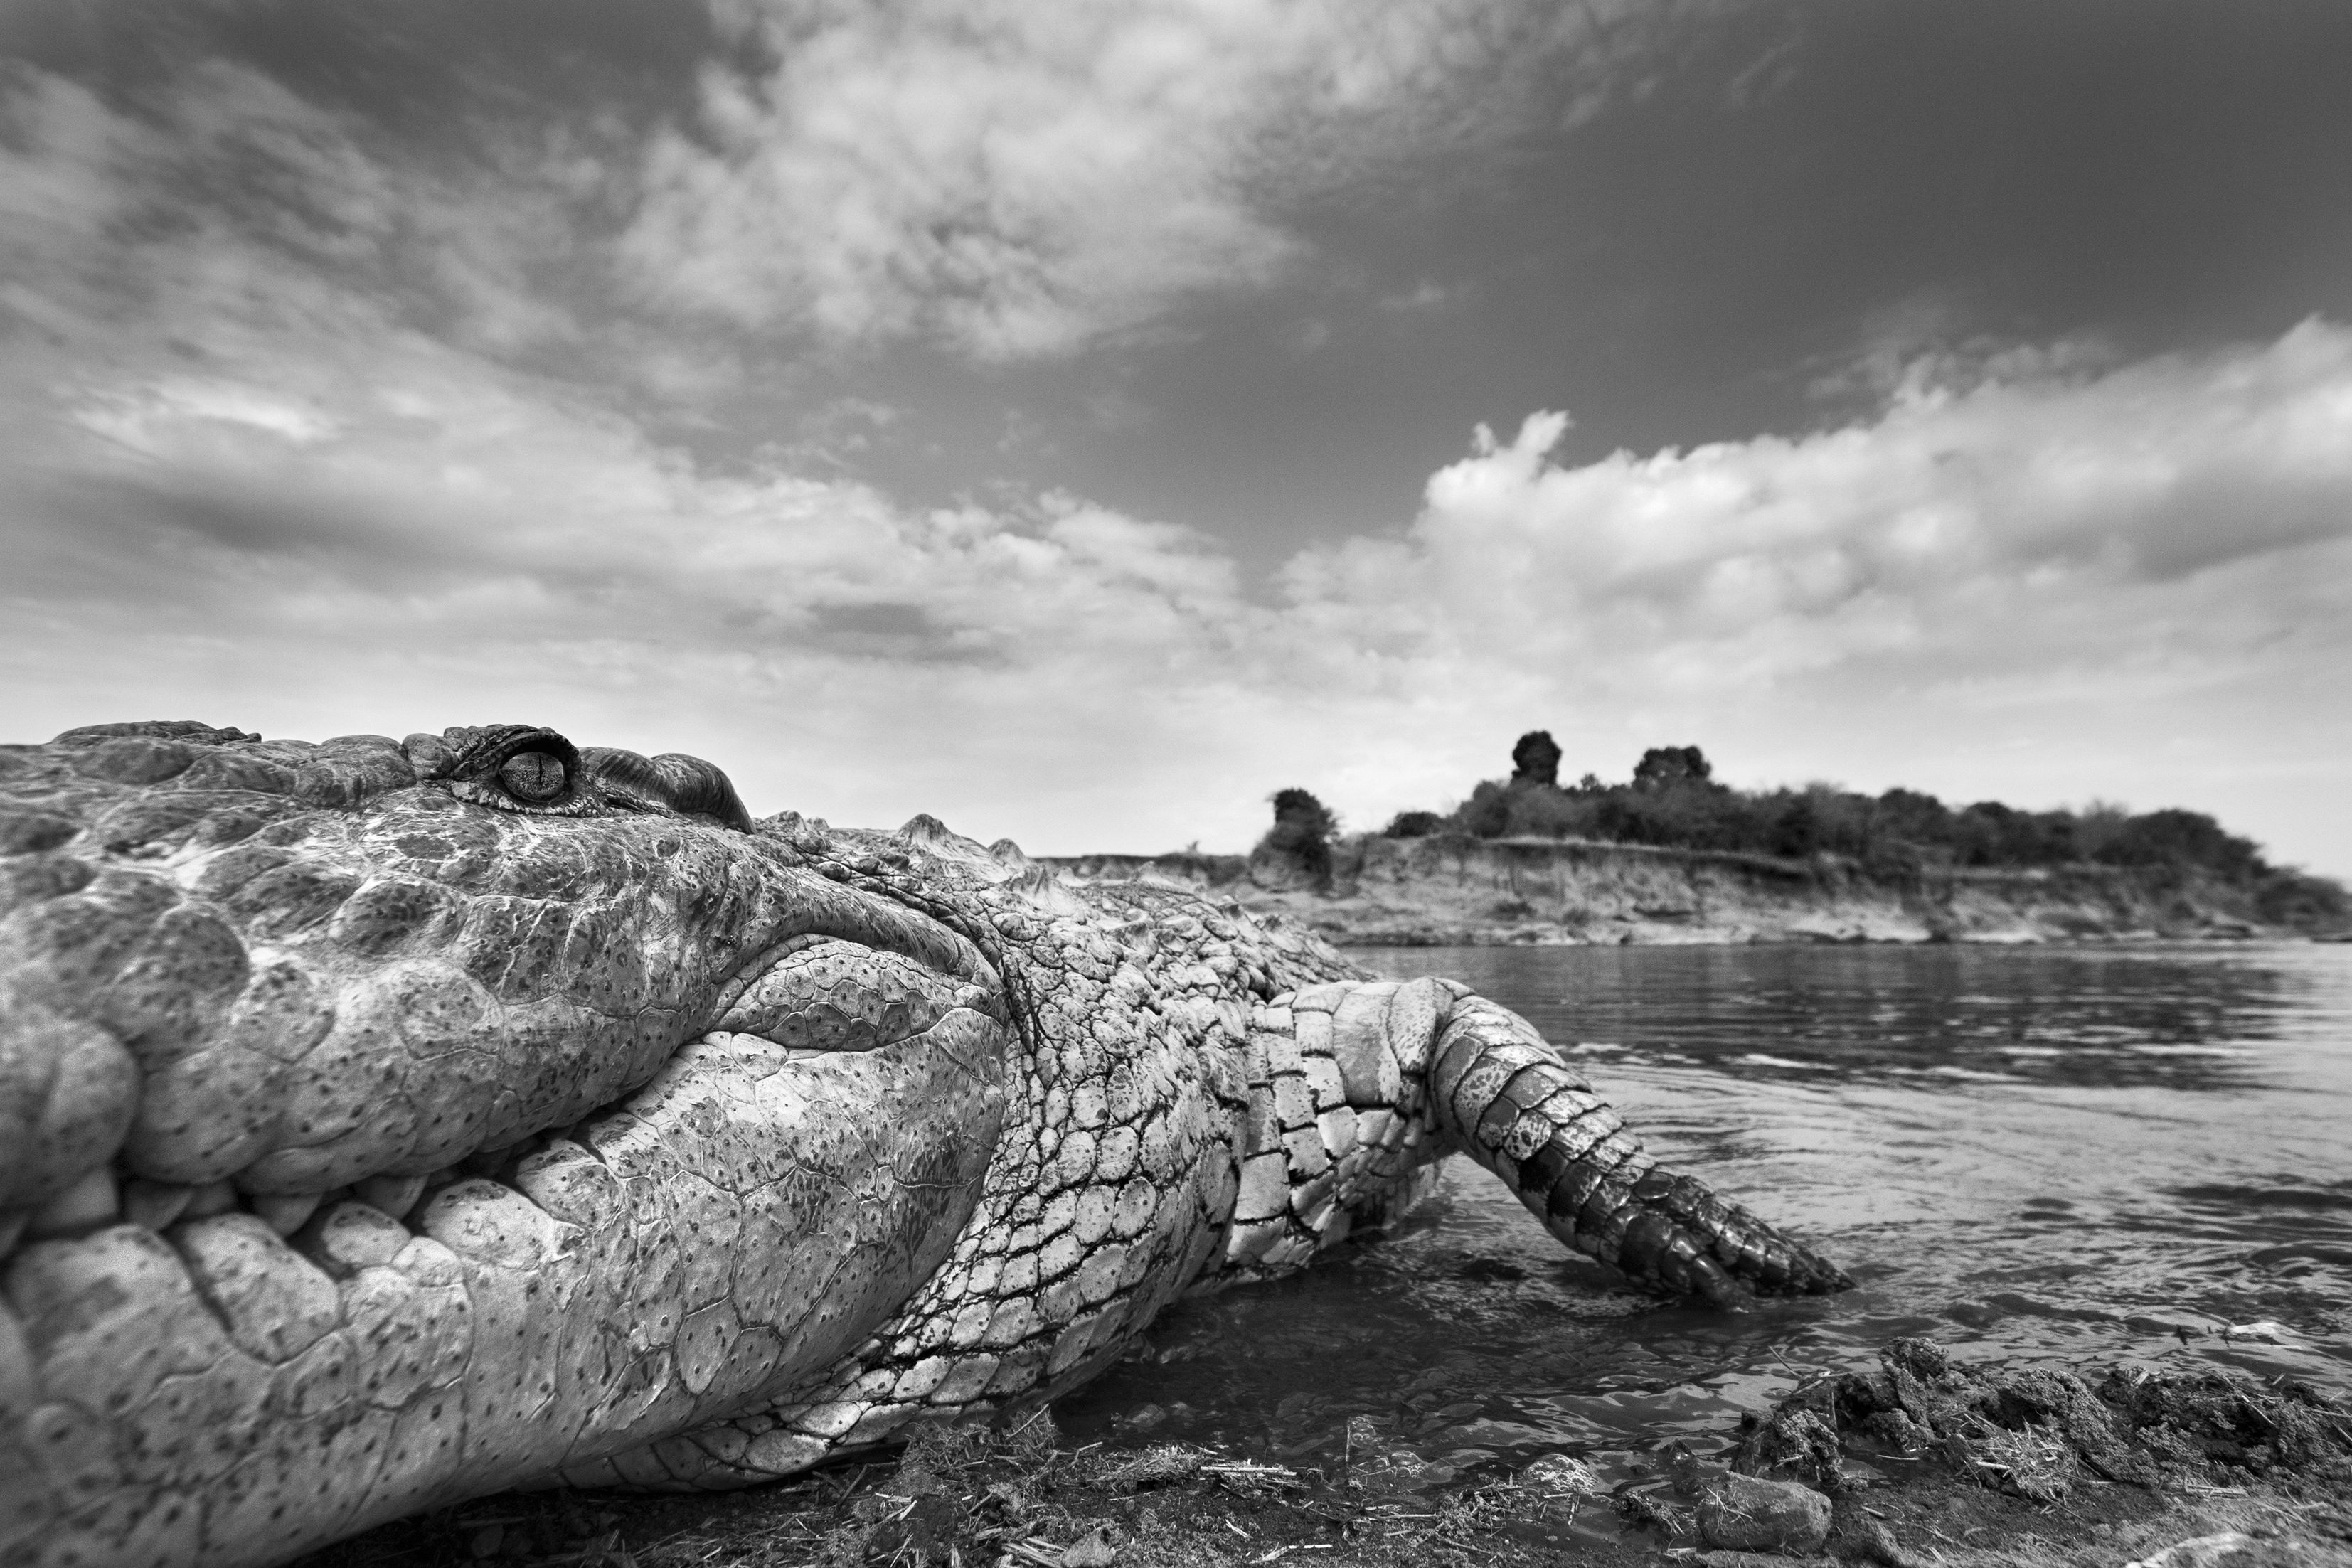 Nile crocodile emerging from the Mara River